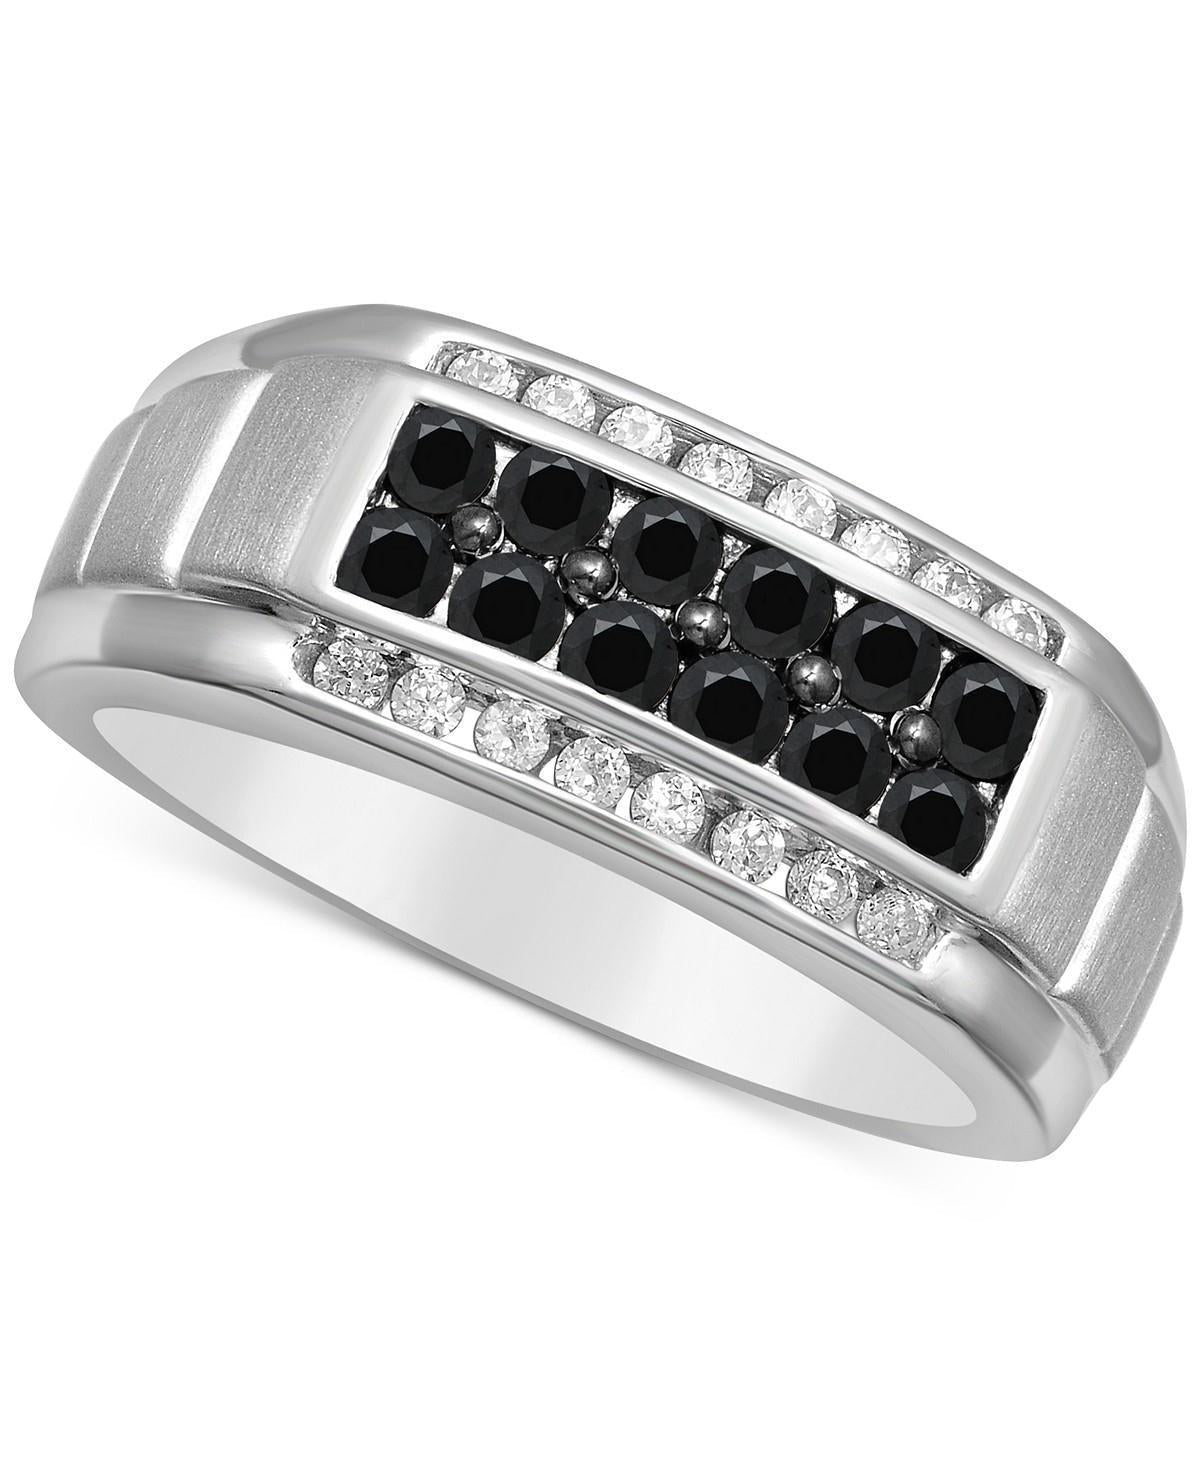 15624R Ring With Diamond